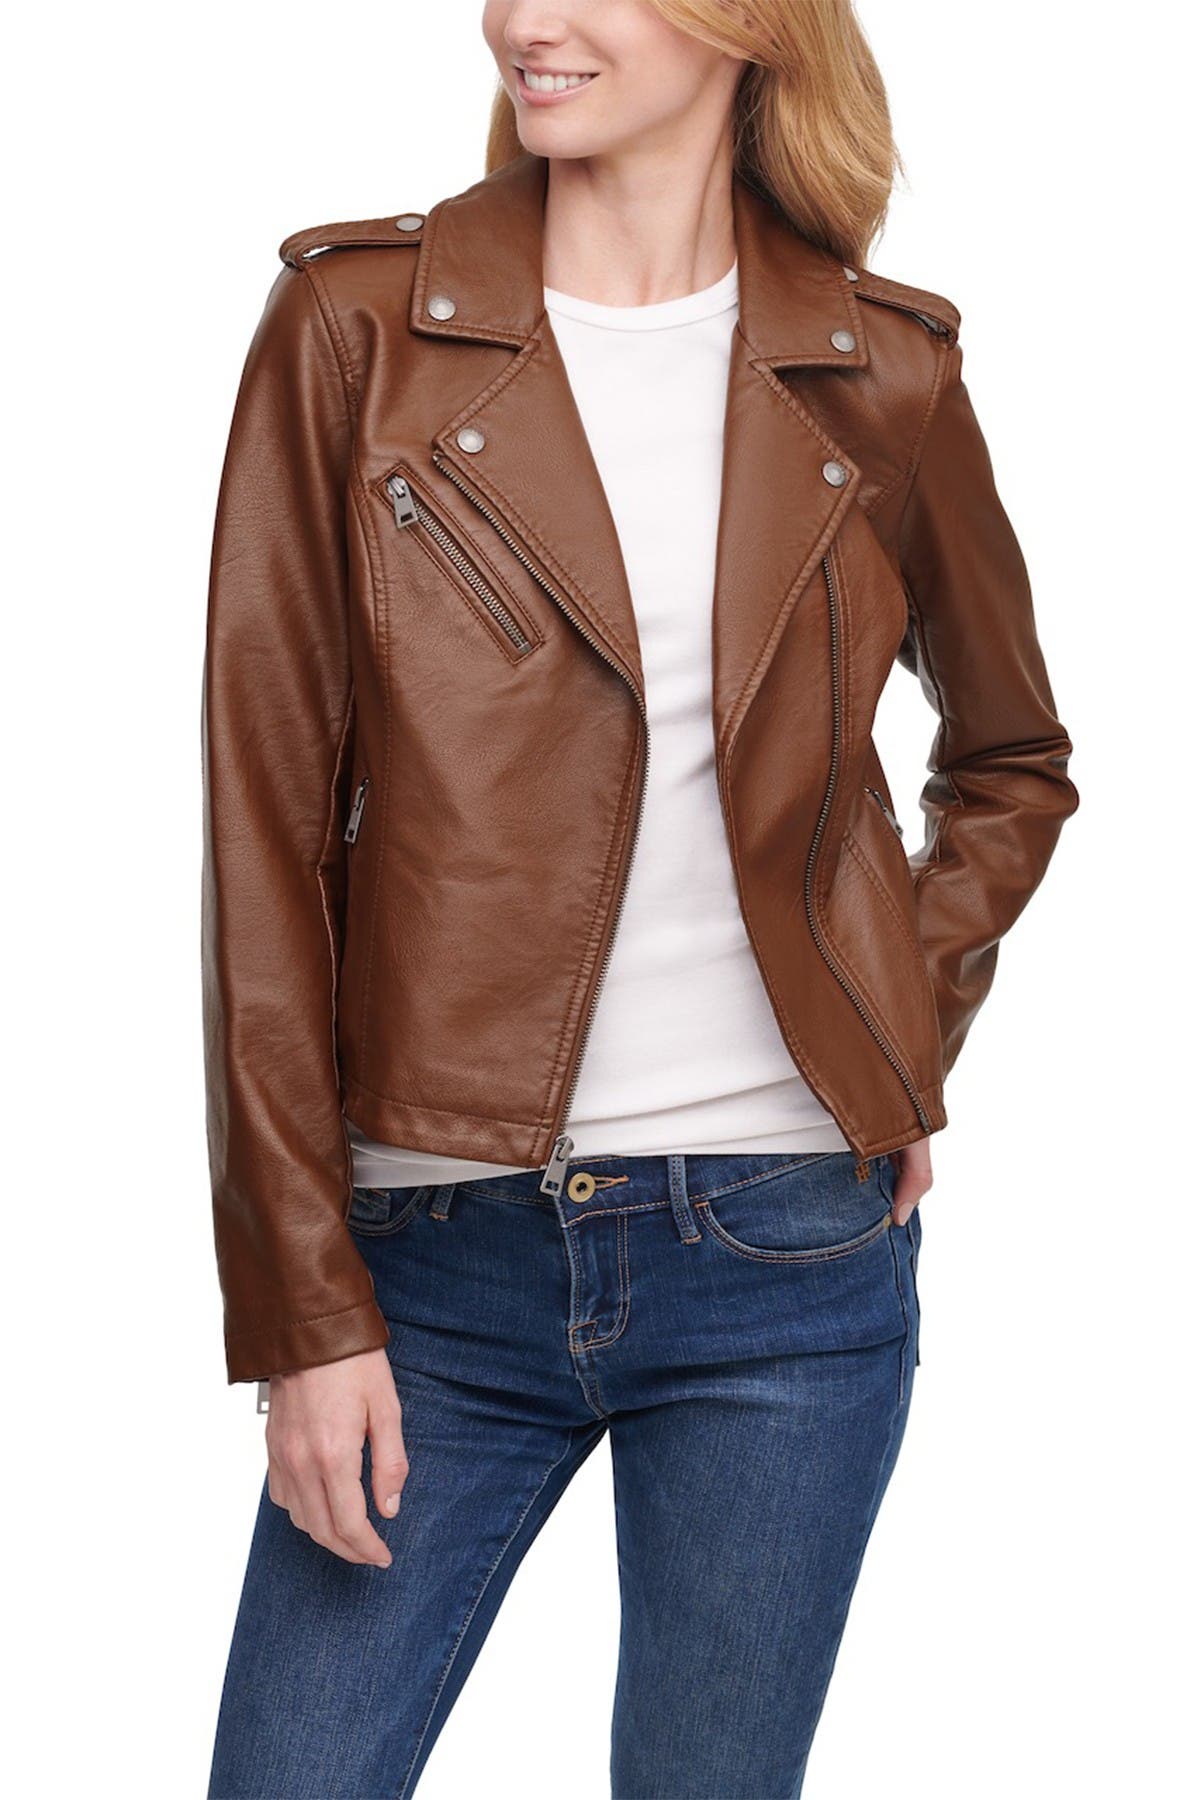 levi's faux leather jacket